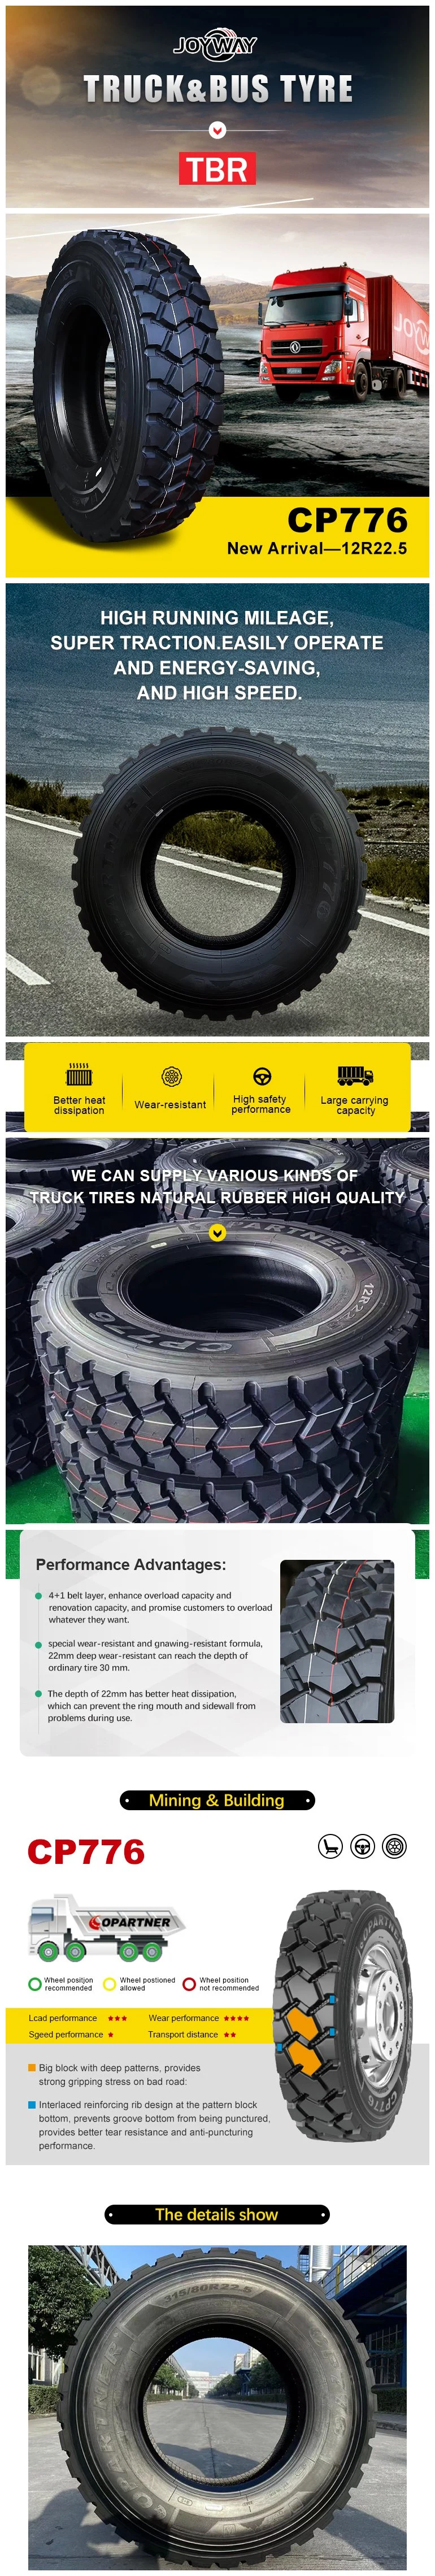 DOT/ECE/Gcc/Eac Tyre Copartner Haida Tubeless Tyres for Truck Wheel 295/80r22.5 385/65r22.5 315/80r22.5 315/70r22.5 11r22.5 12.00r20 Semi Truck Tires